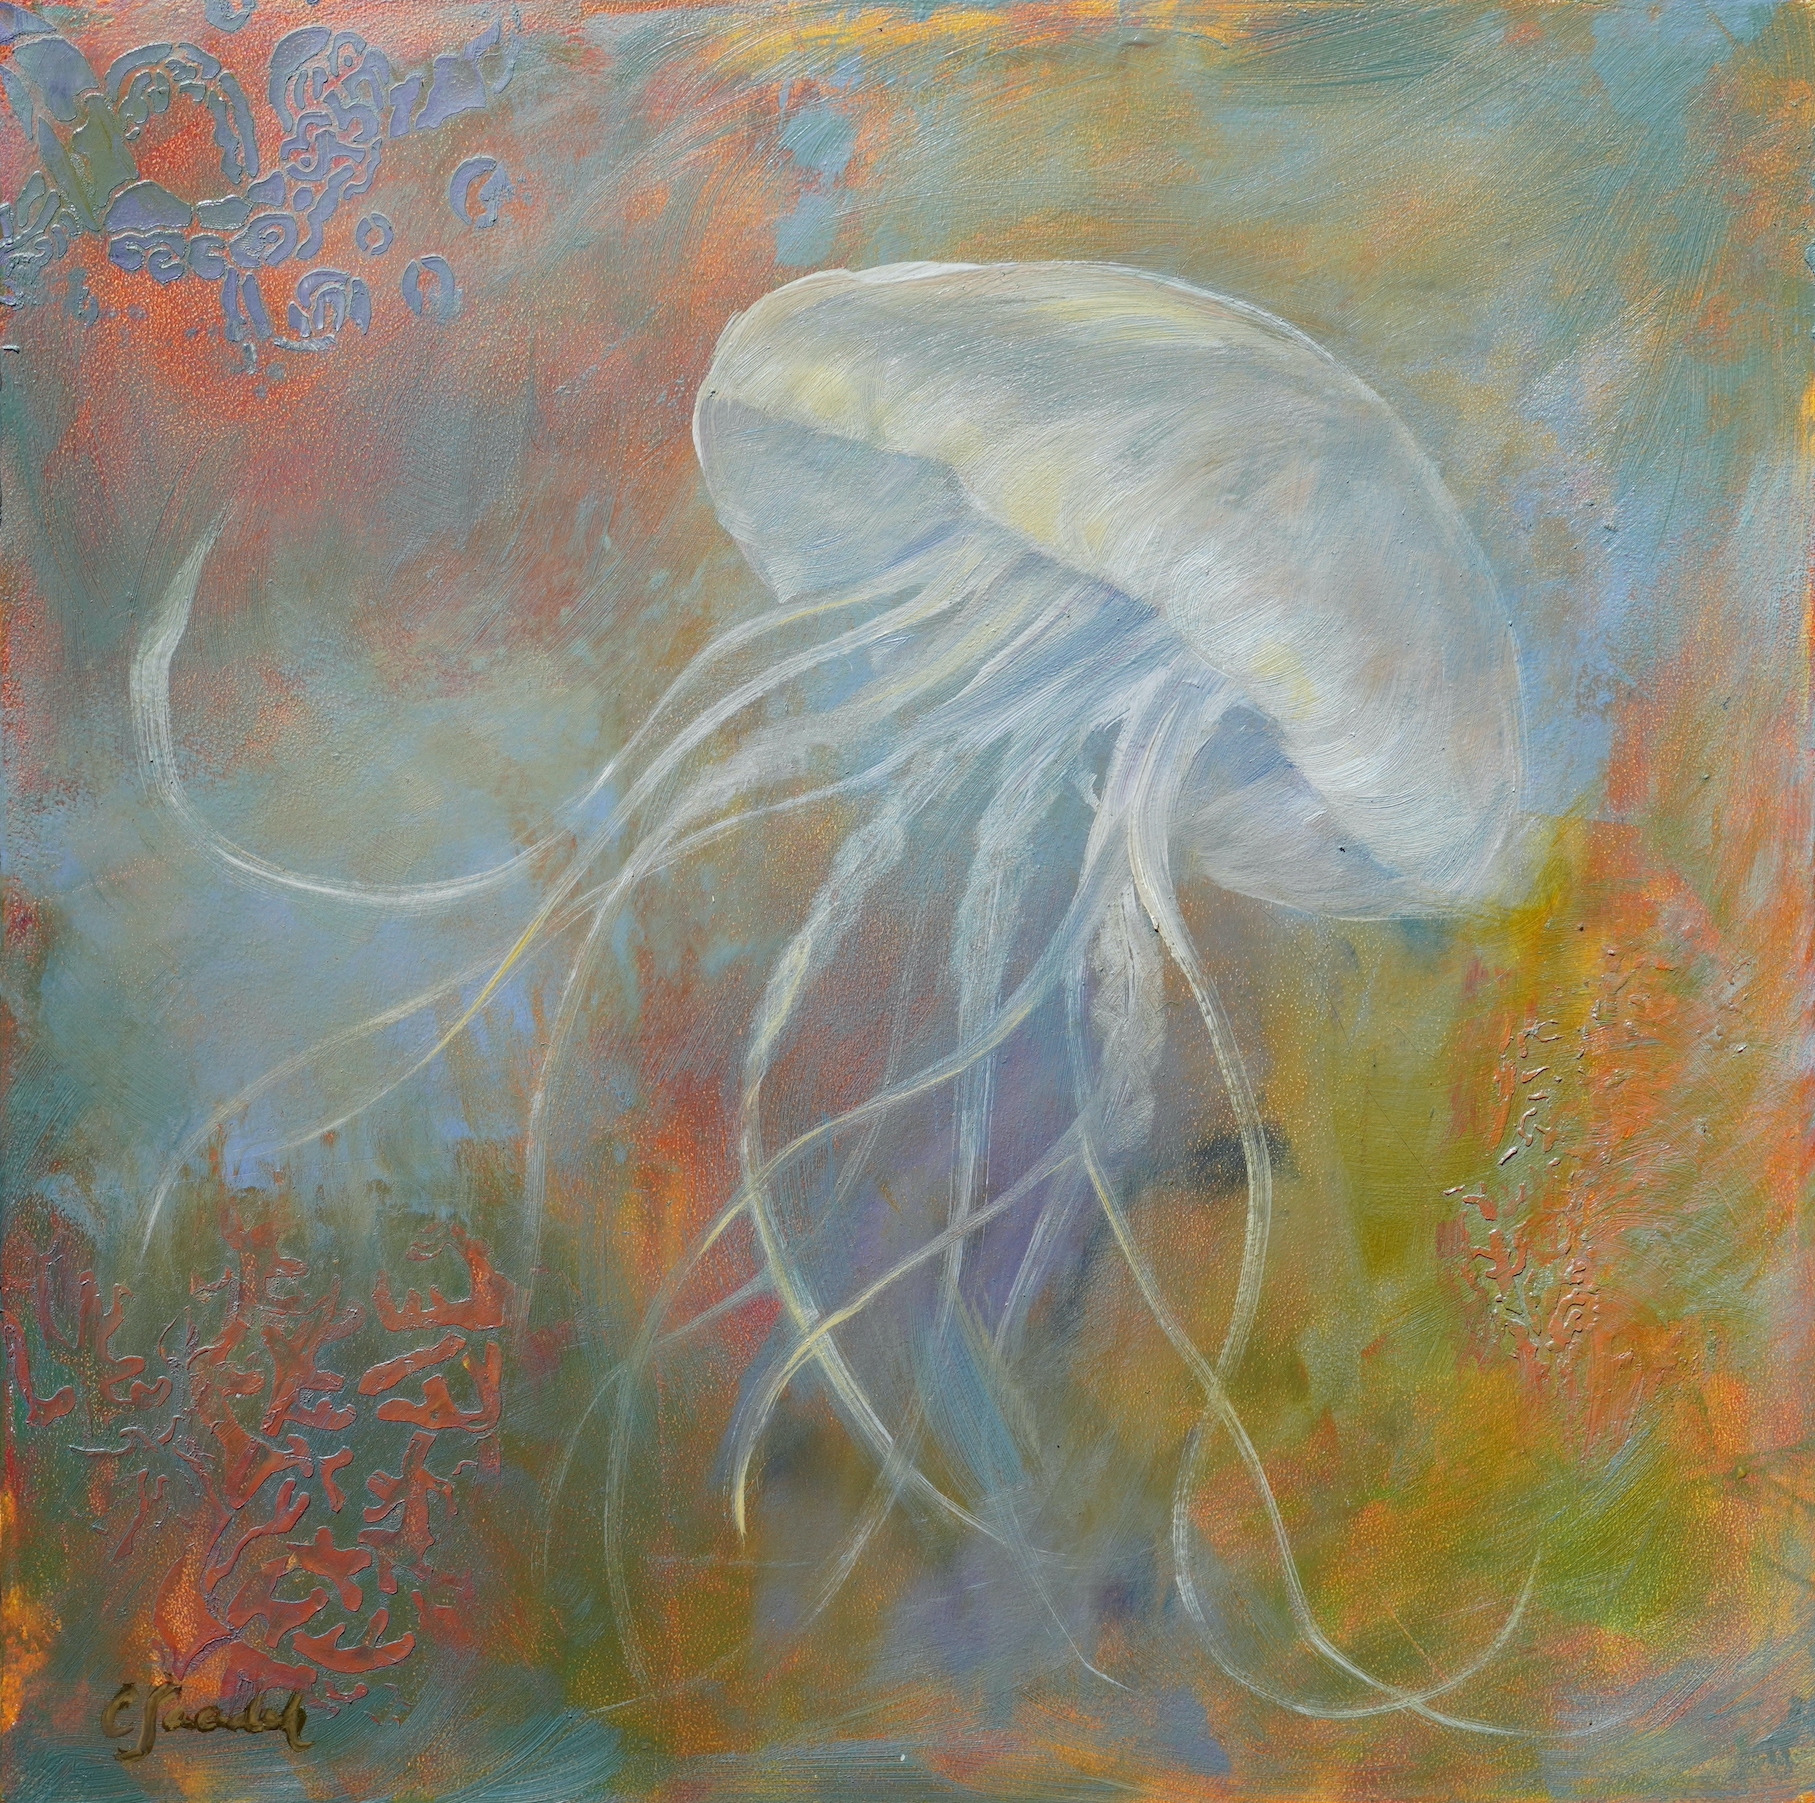 Jellyfish r3qoh4